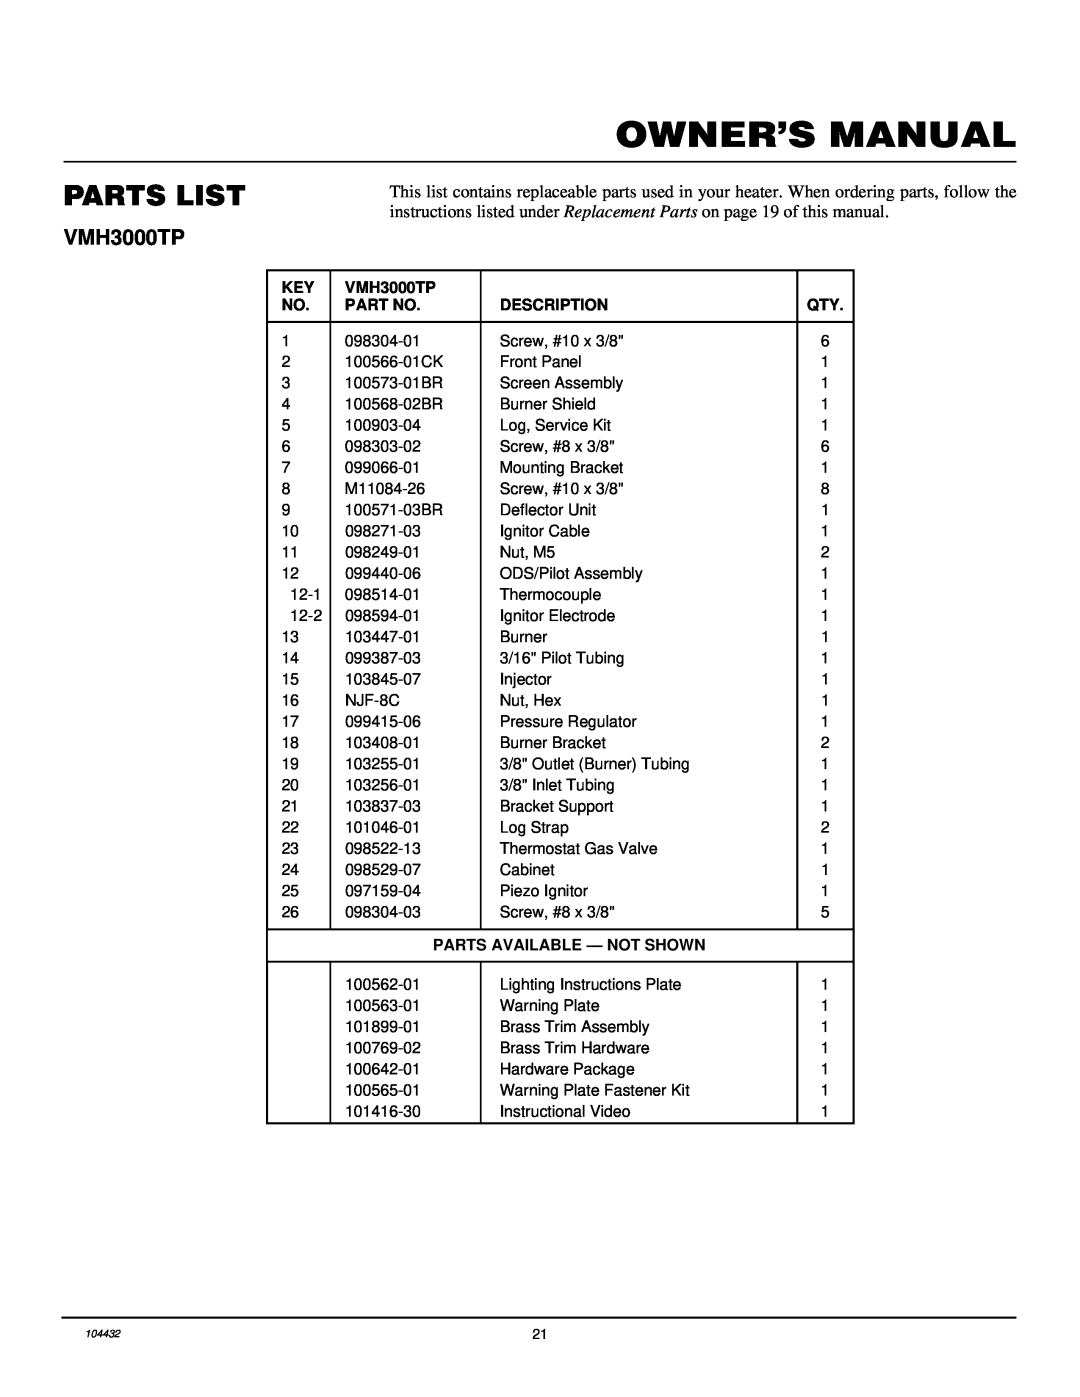 Vanguard Heating VMH3000TP Parts List, Owner’S Manual, Part No, Description, Parts Available — Not Shown 